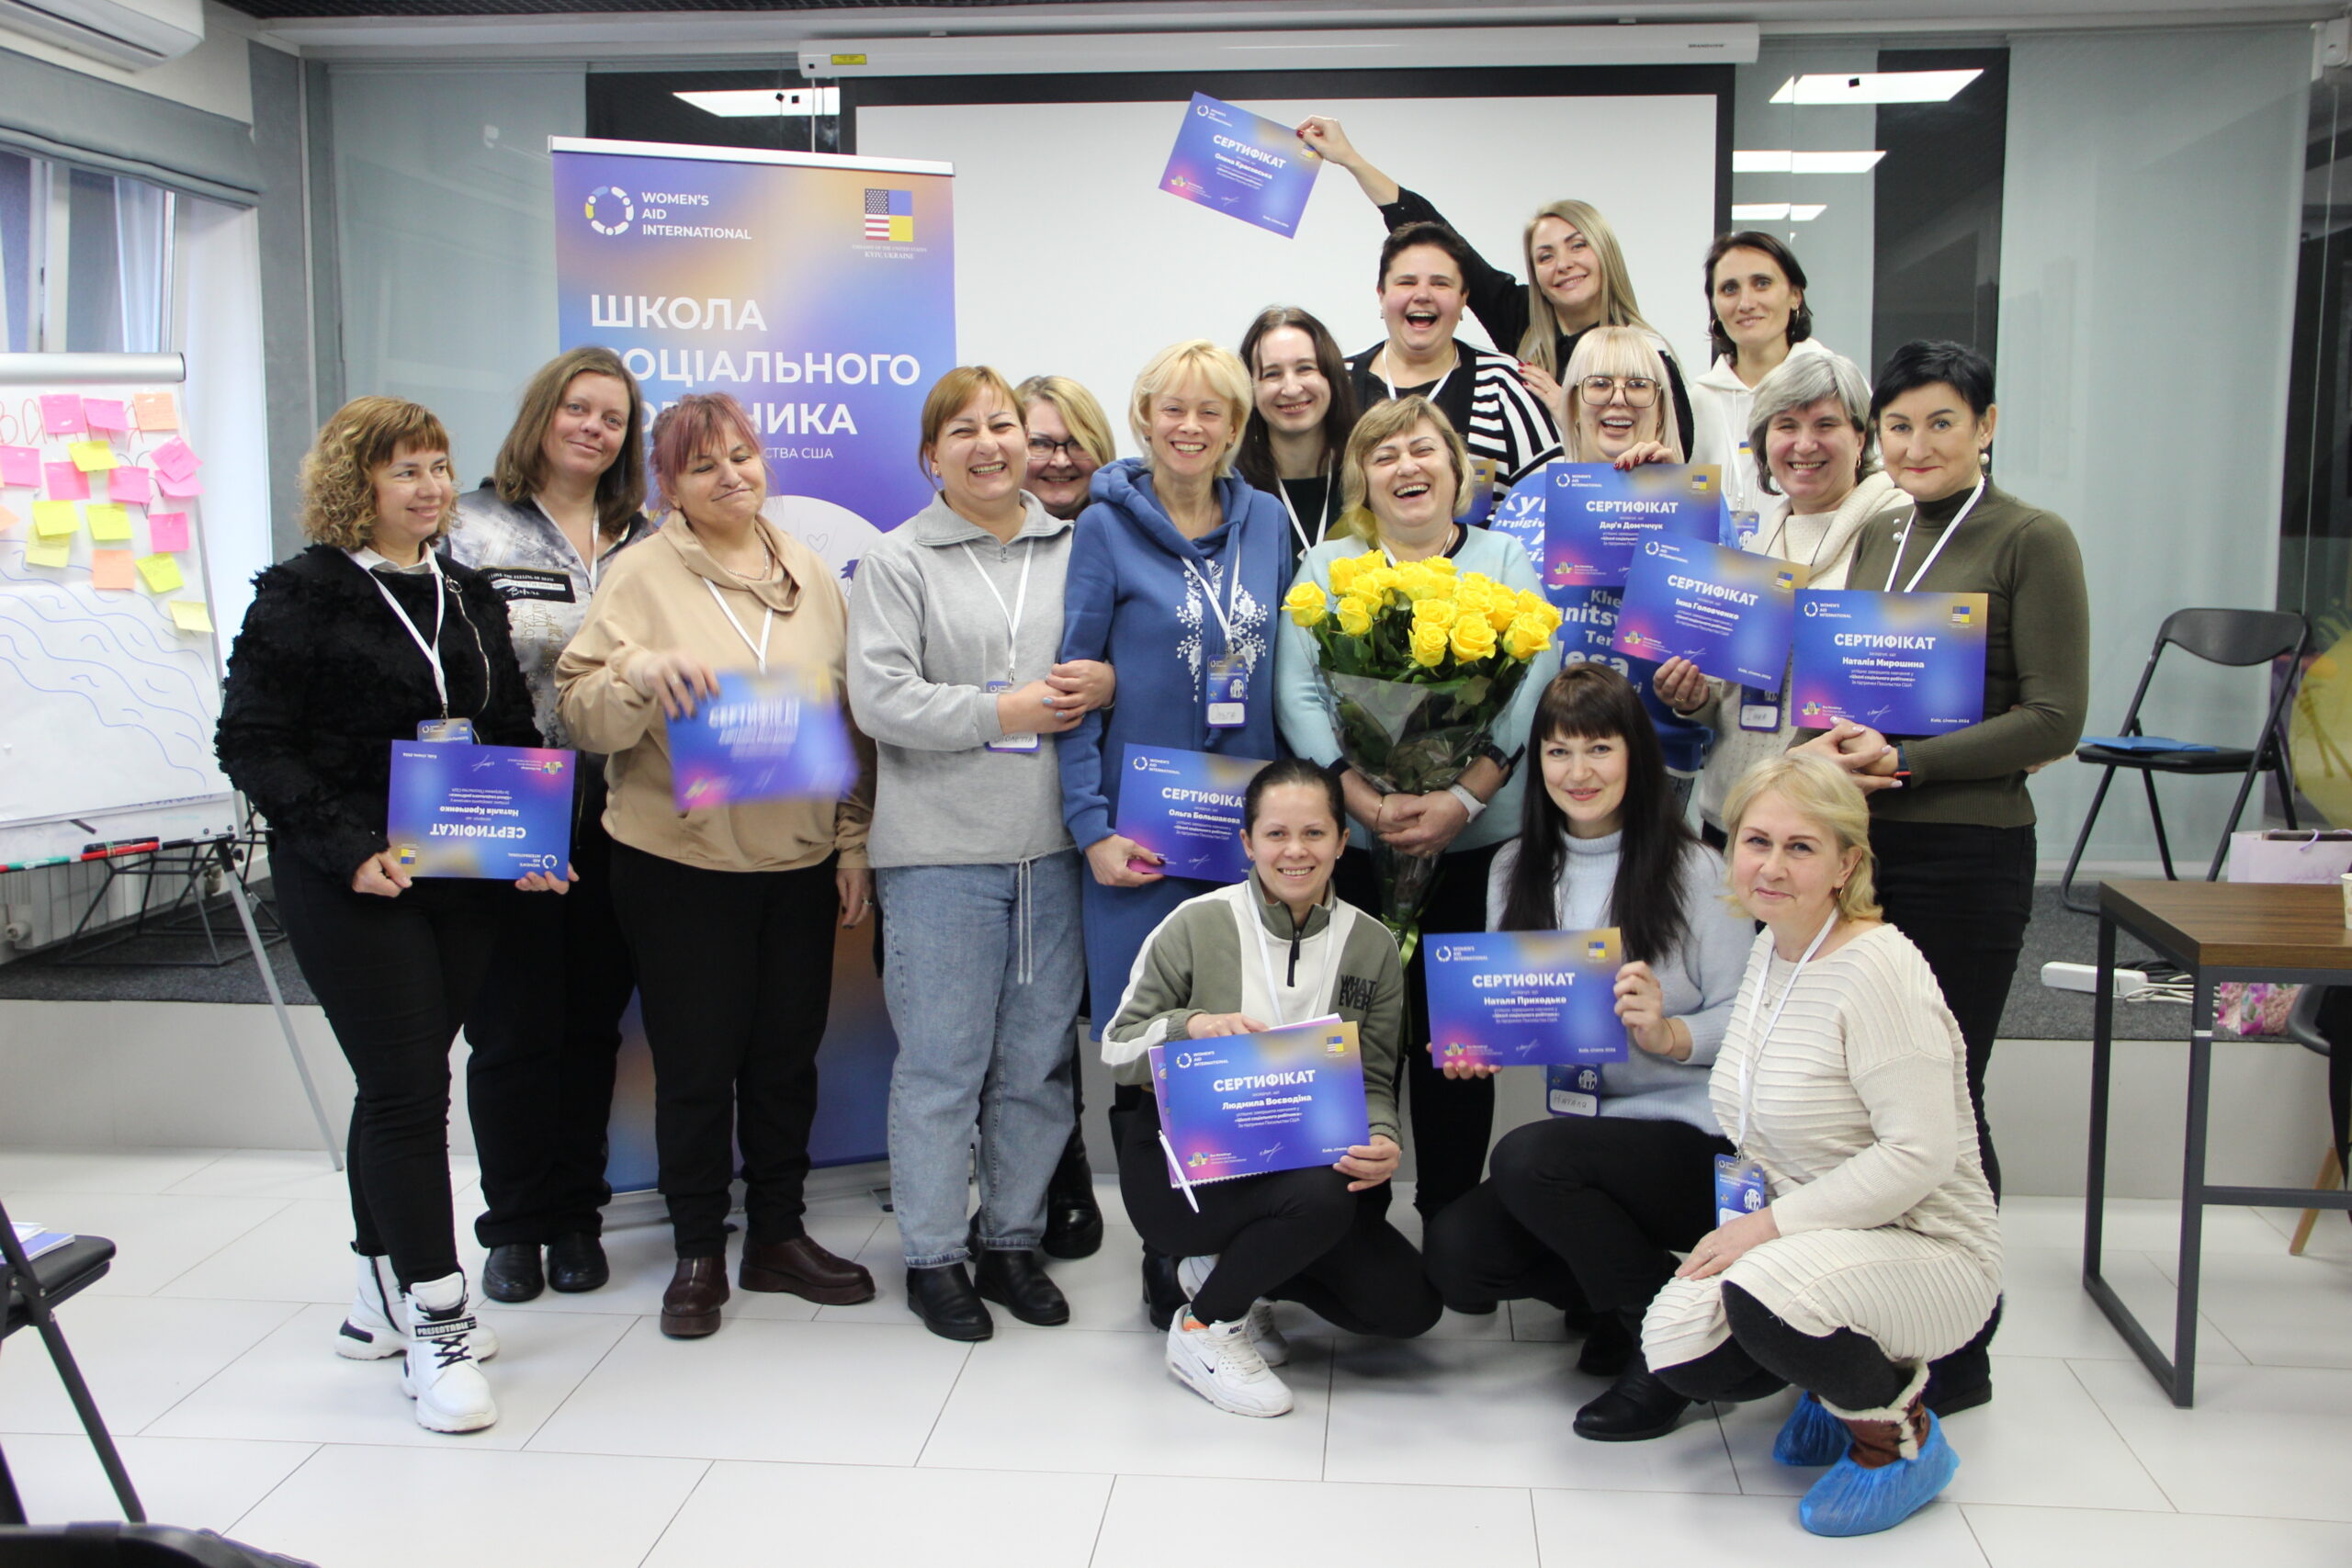 fond yany matviychuk, school for social worker, wai, usembassy kyiv